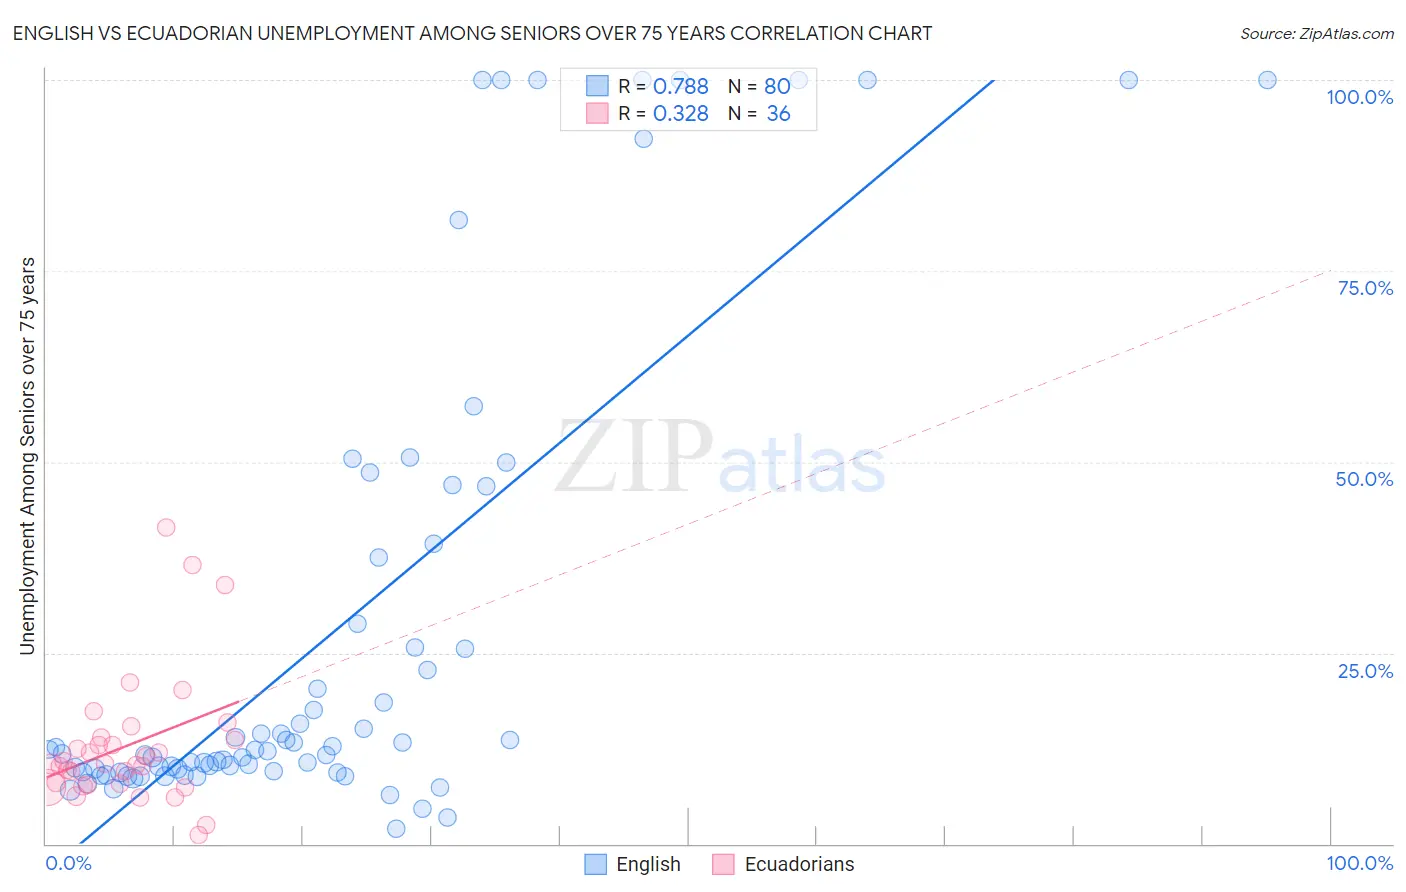 English vs Ecuadorian Unemployment Among Seniors over 75 years